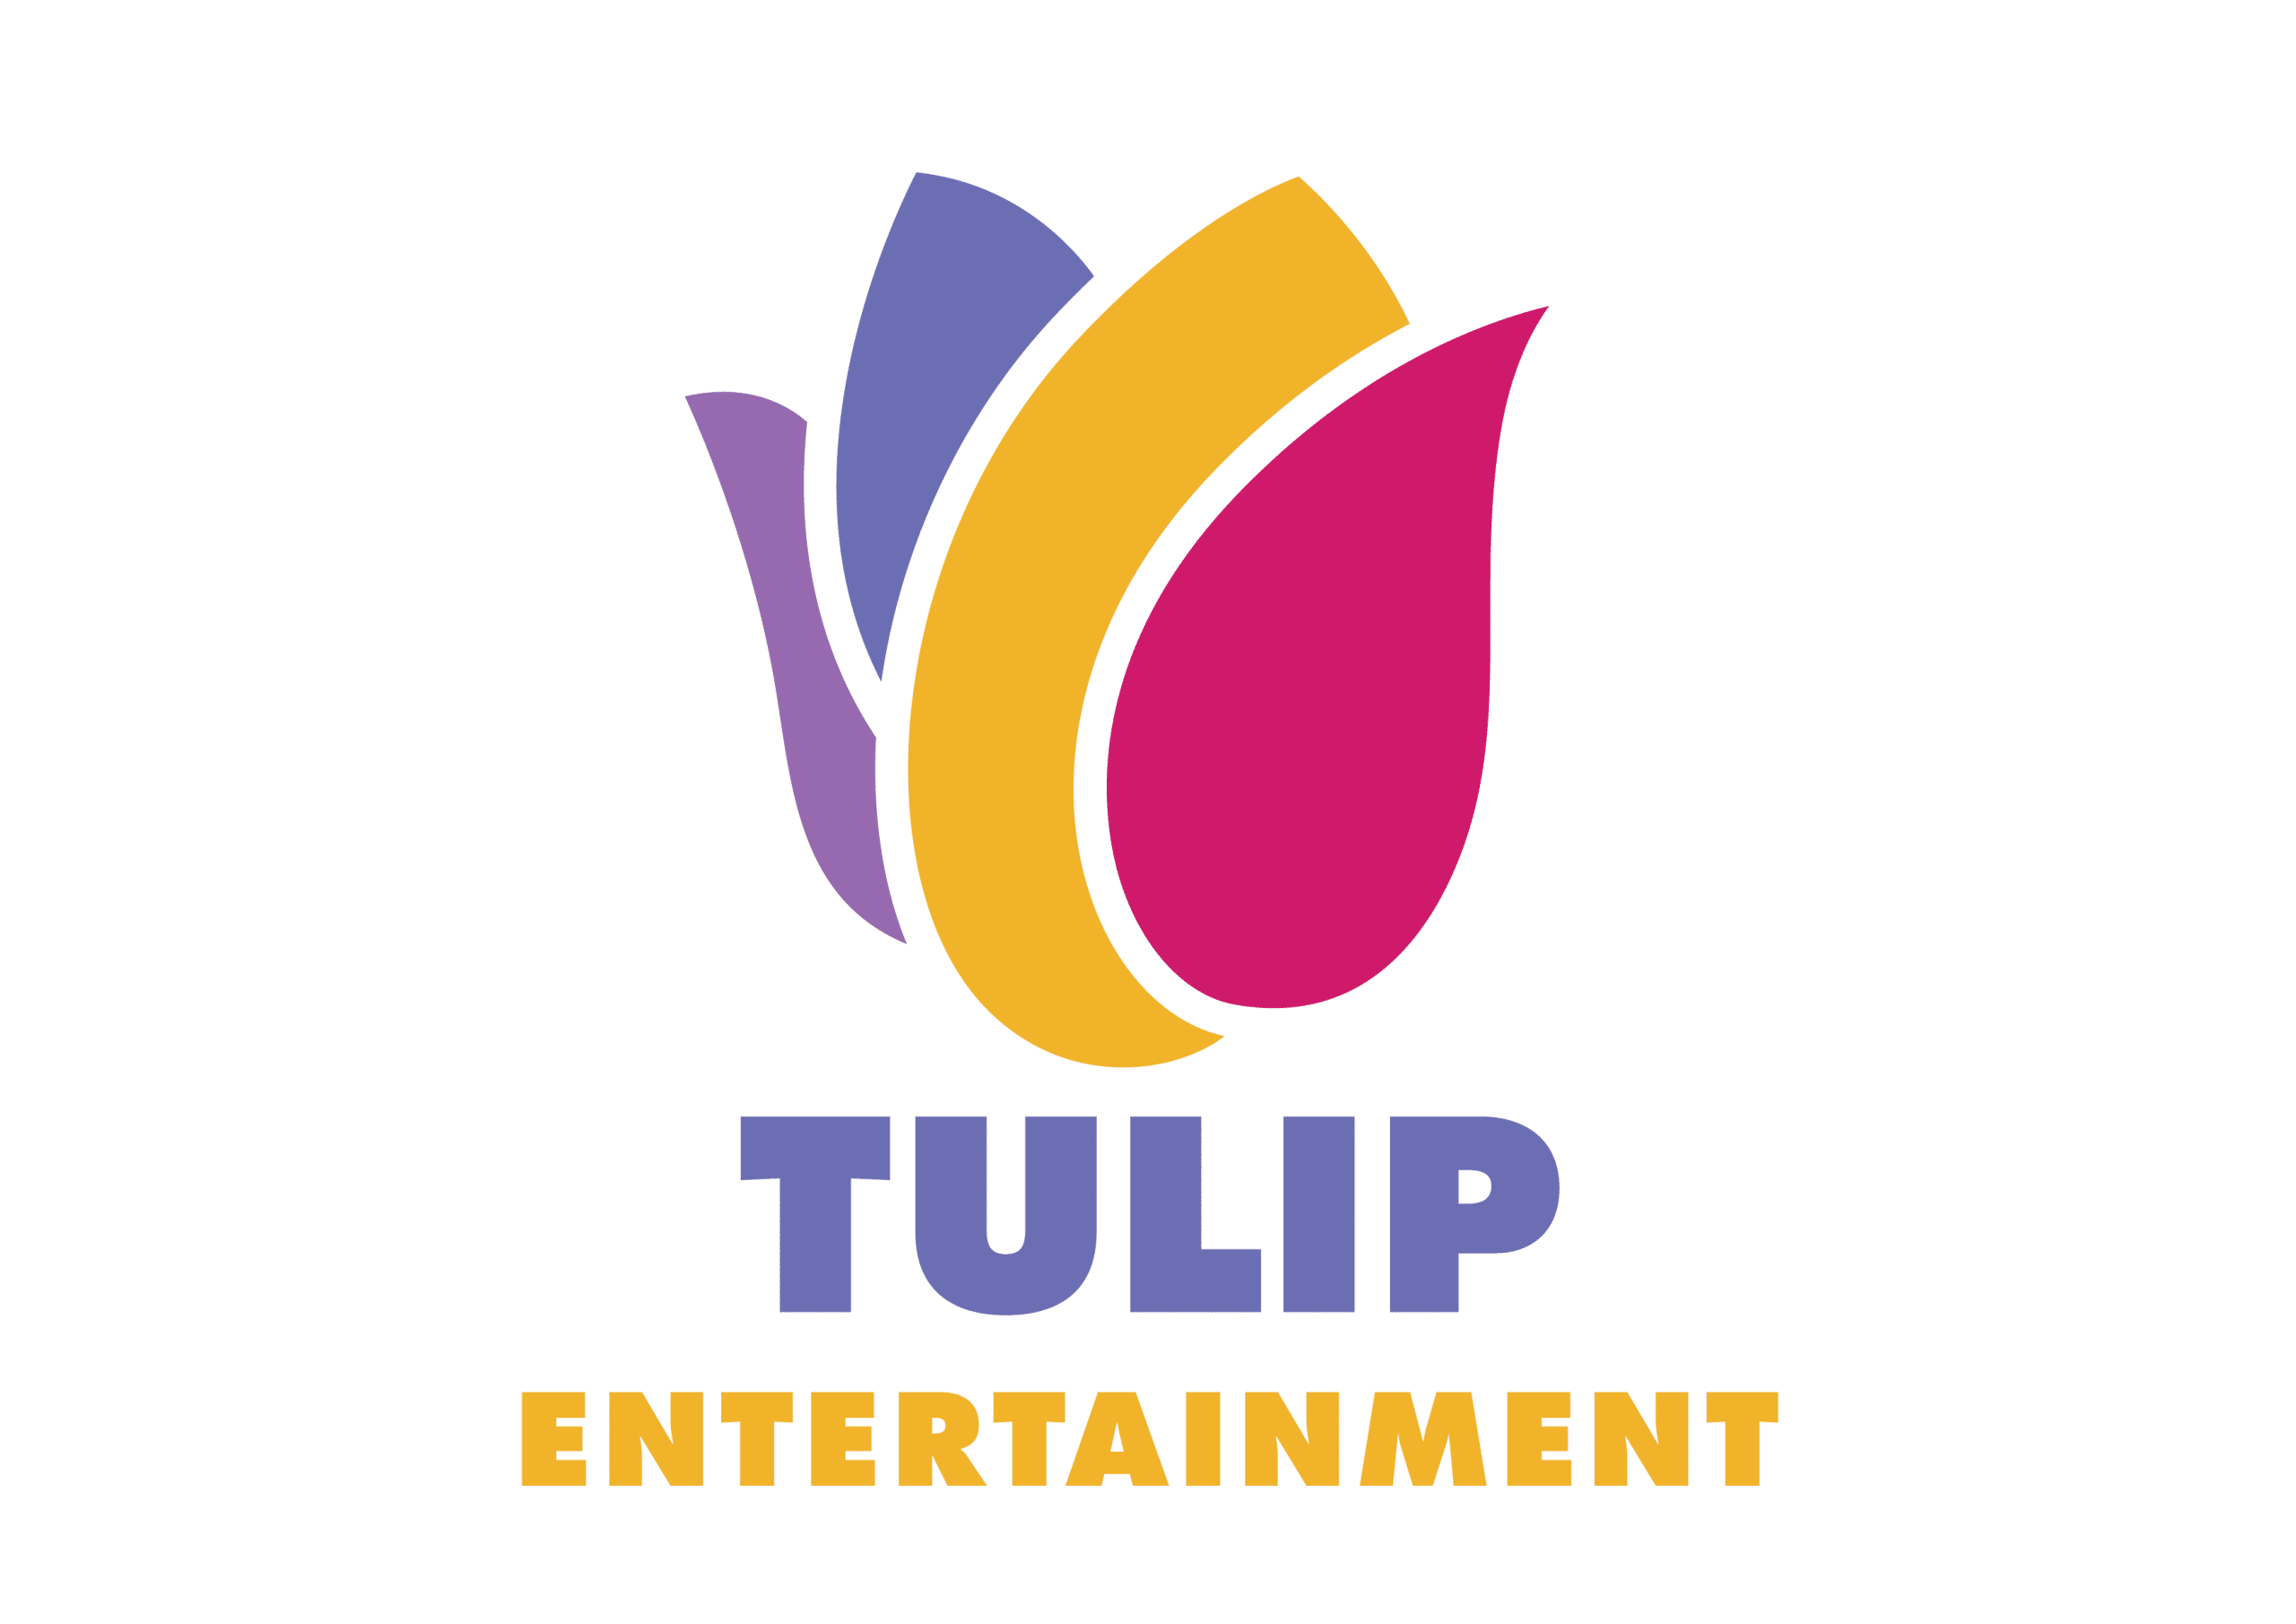 Colorful Tulip logo. Text below the logo: Tulip Entertainment